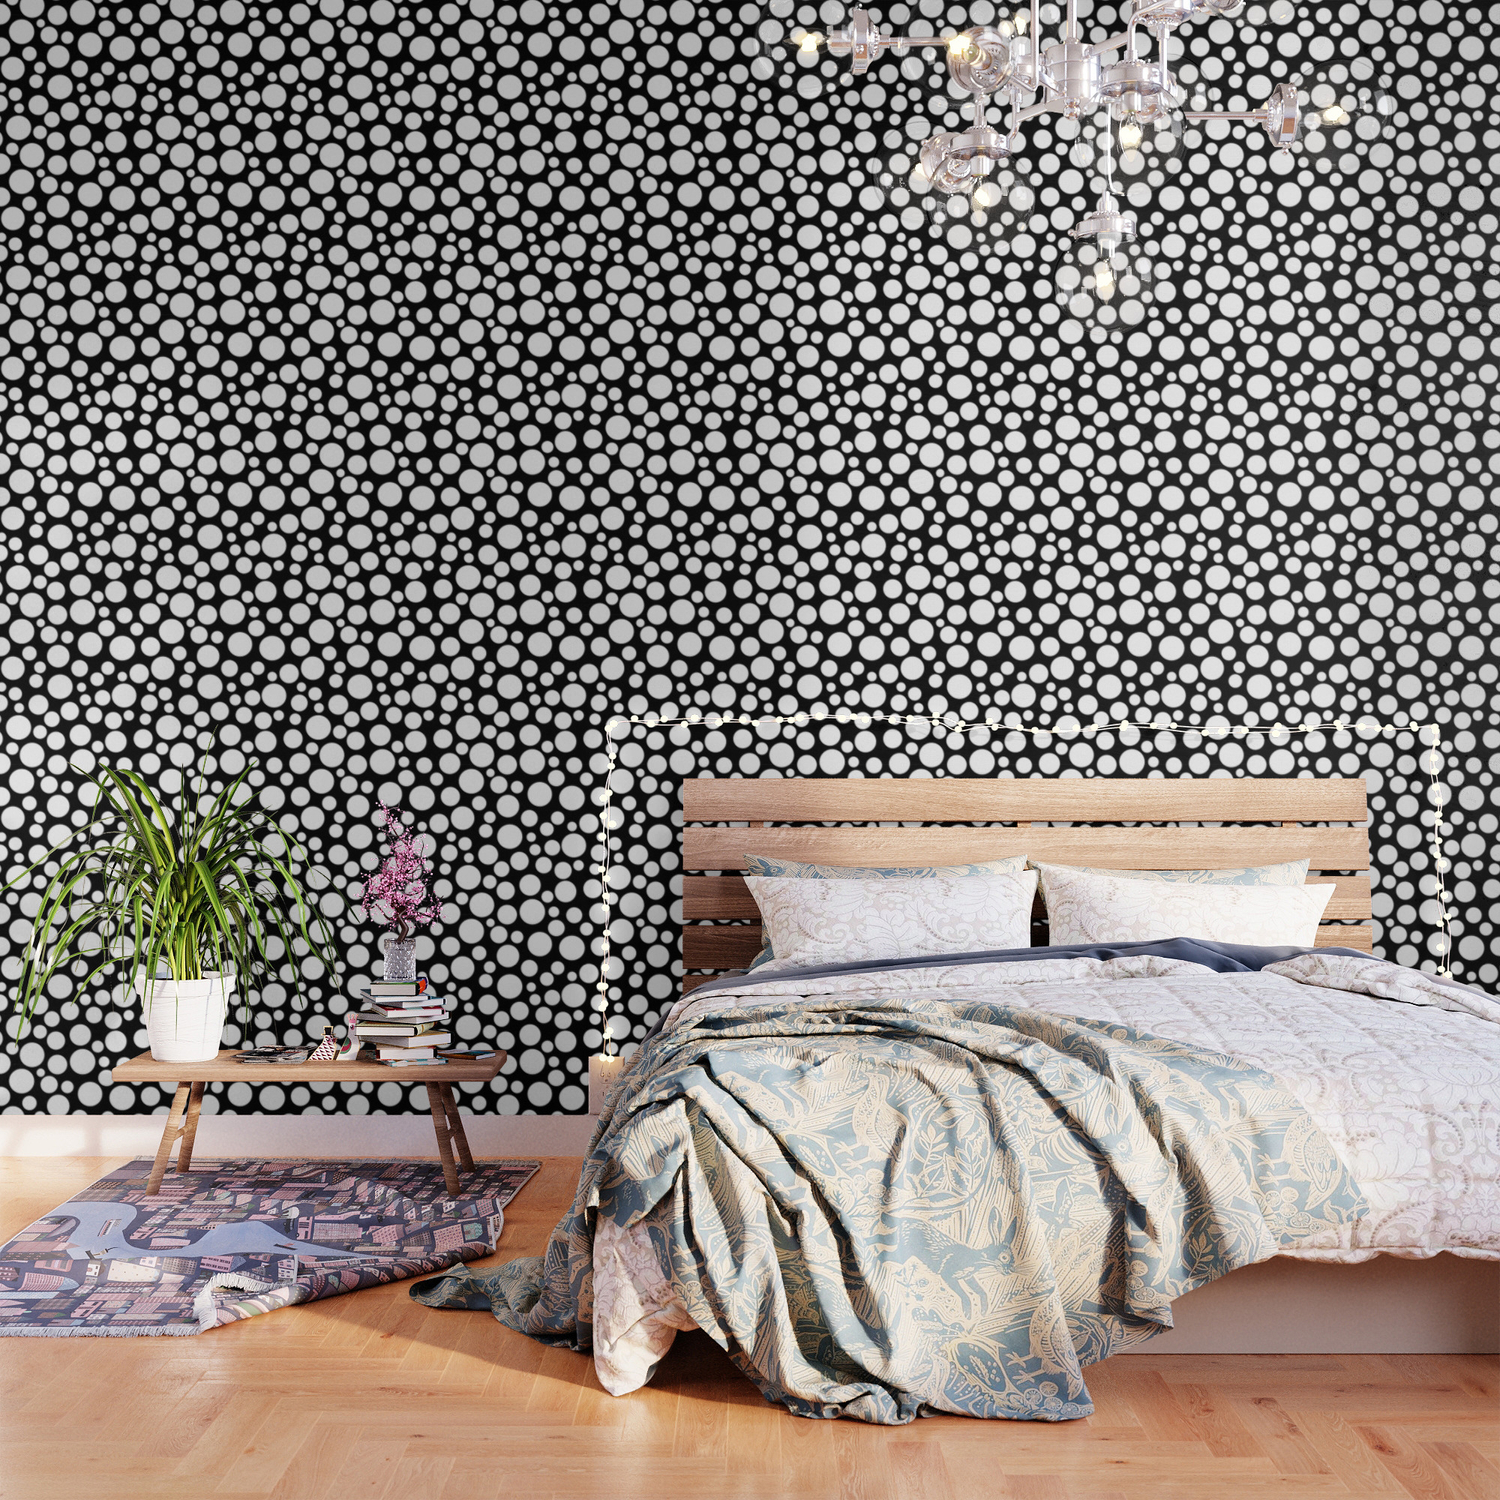 White polka dots on a black background. Wallpaper by Fuzzyfox | Society6